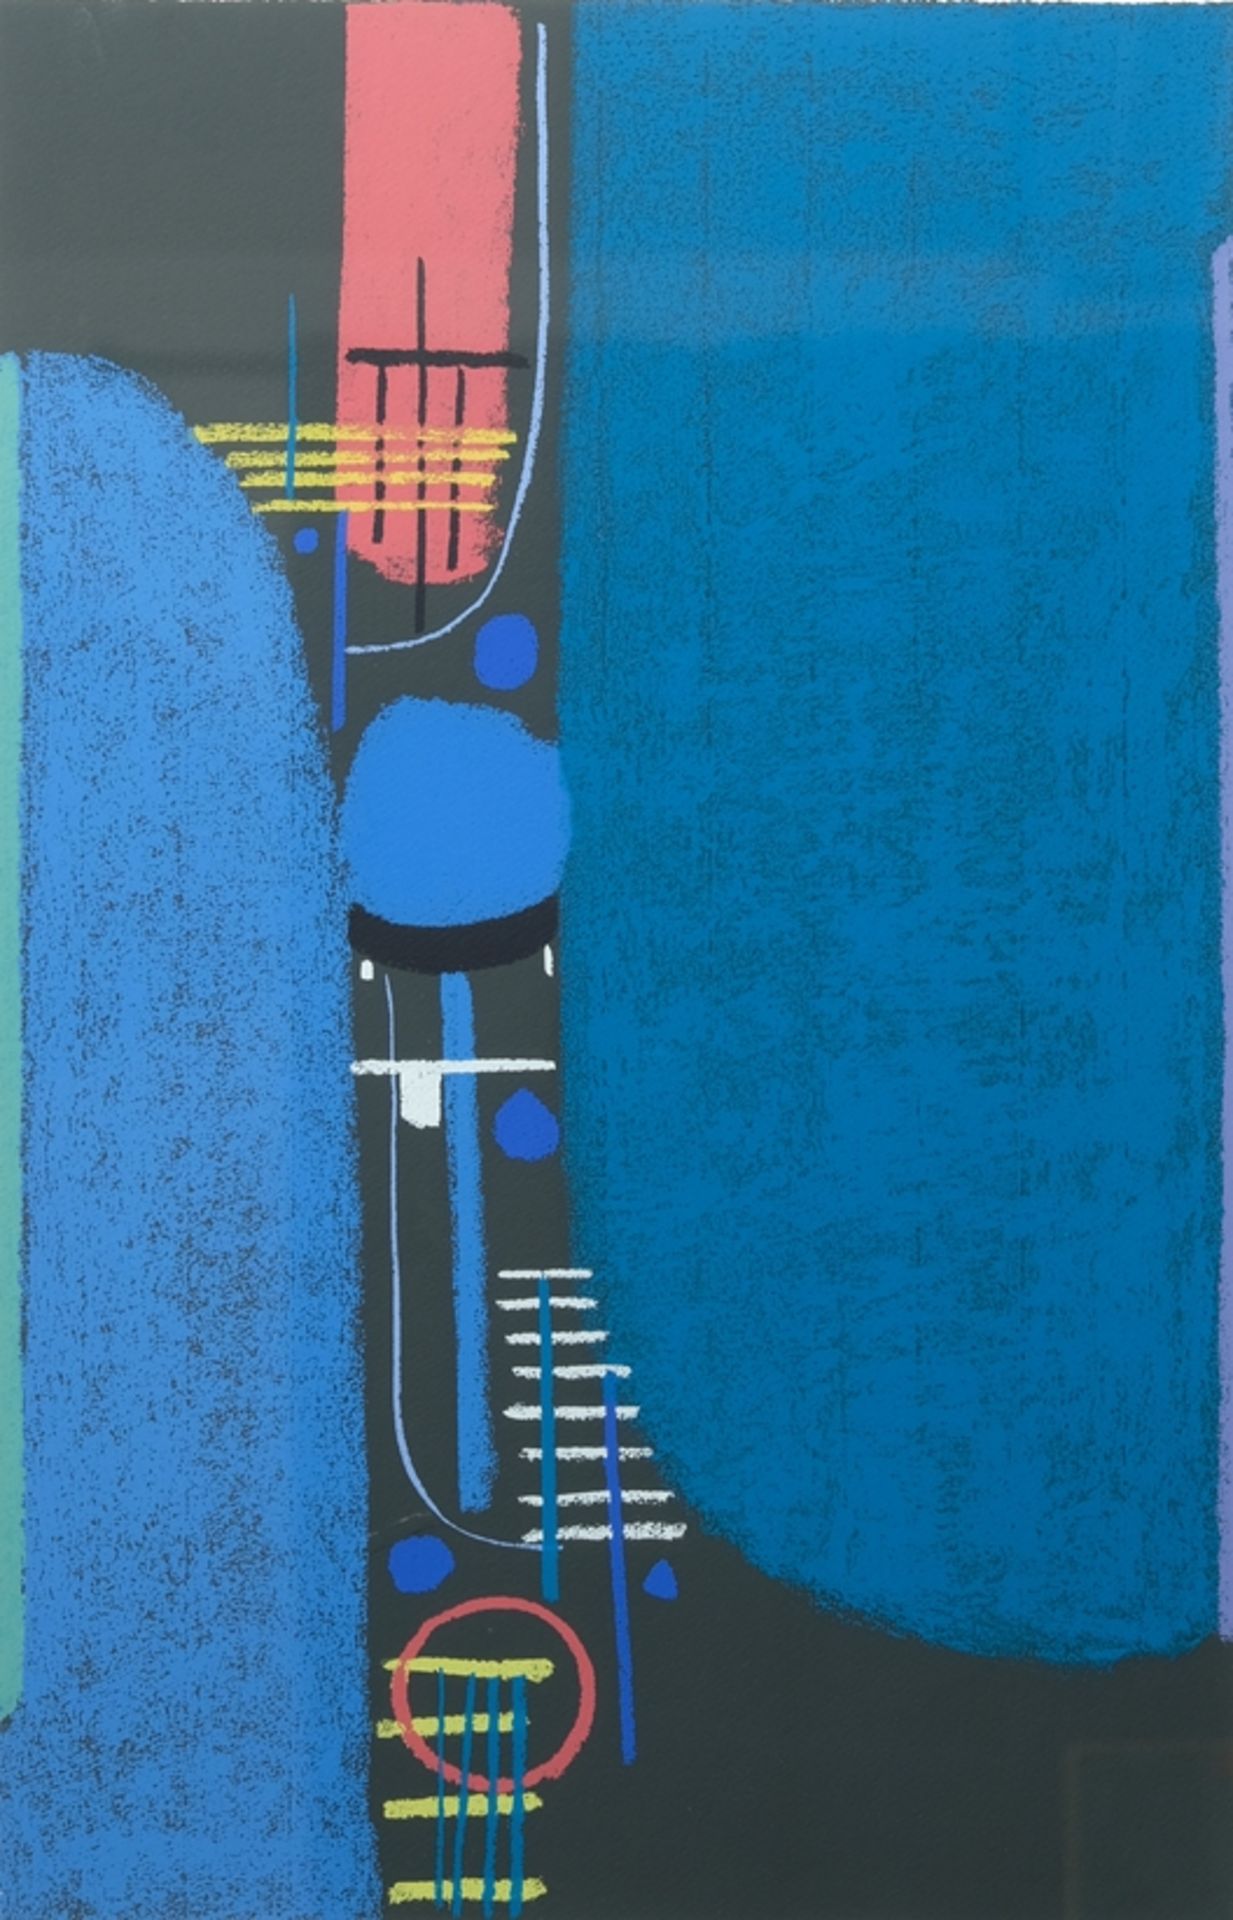 Ackermann, Max (1887-1975) Abstrakte Komposition in Blau, 1972, Serigrafie in Farbe. 